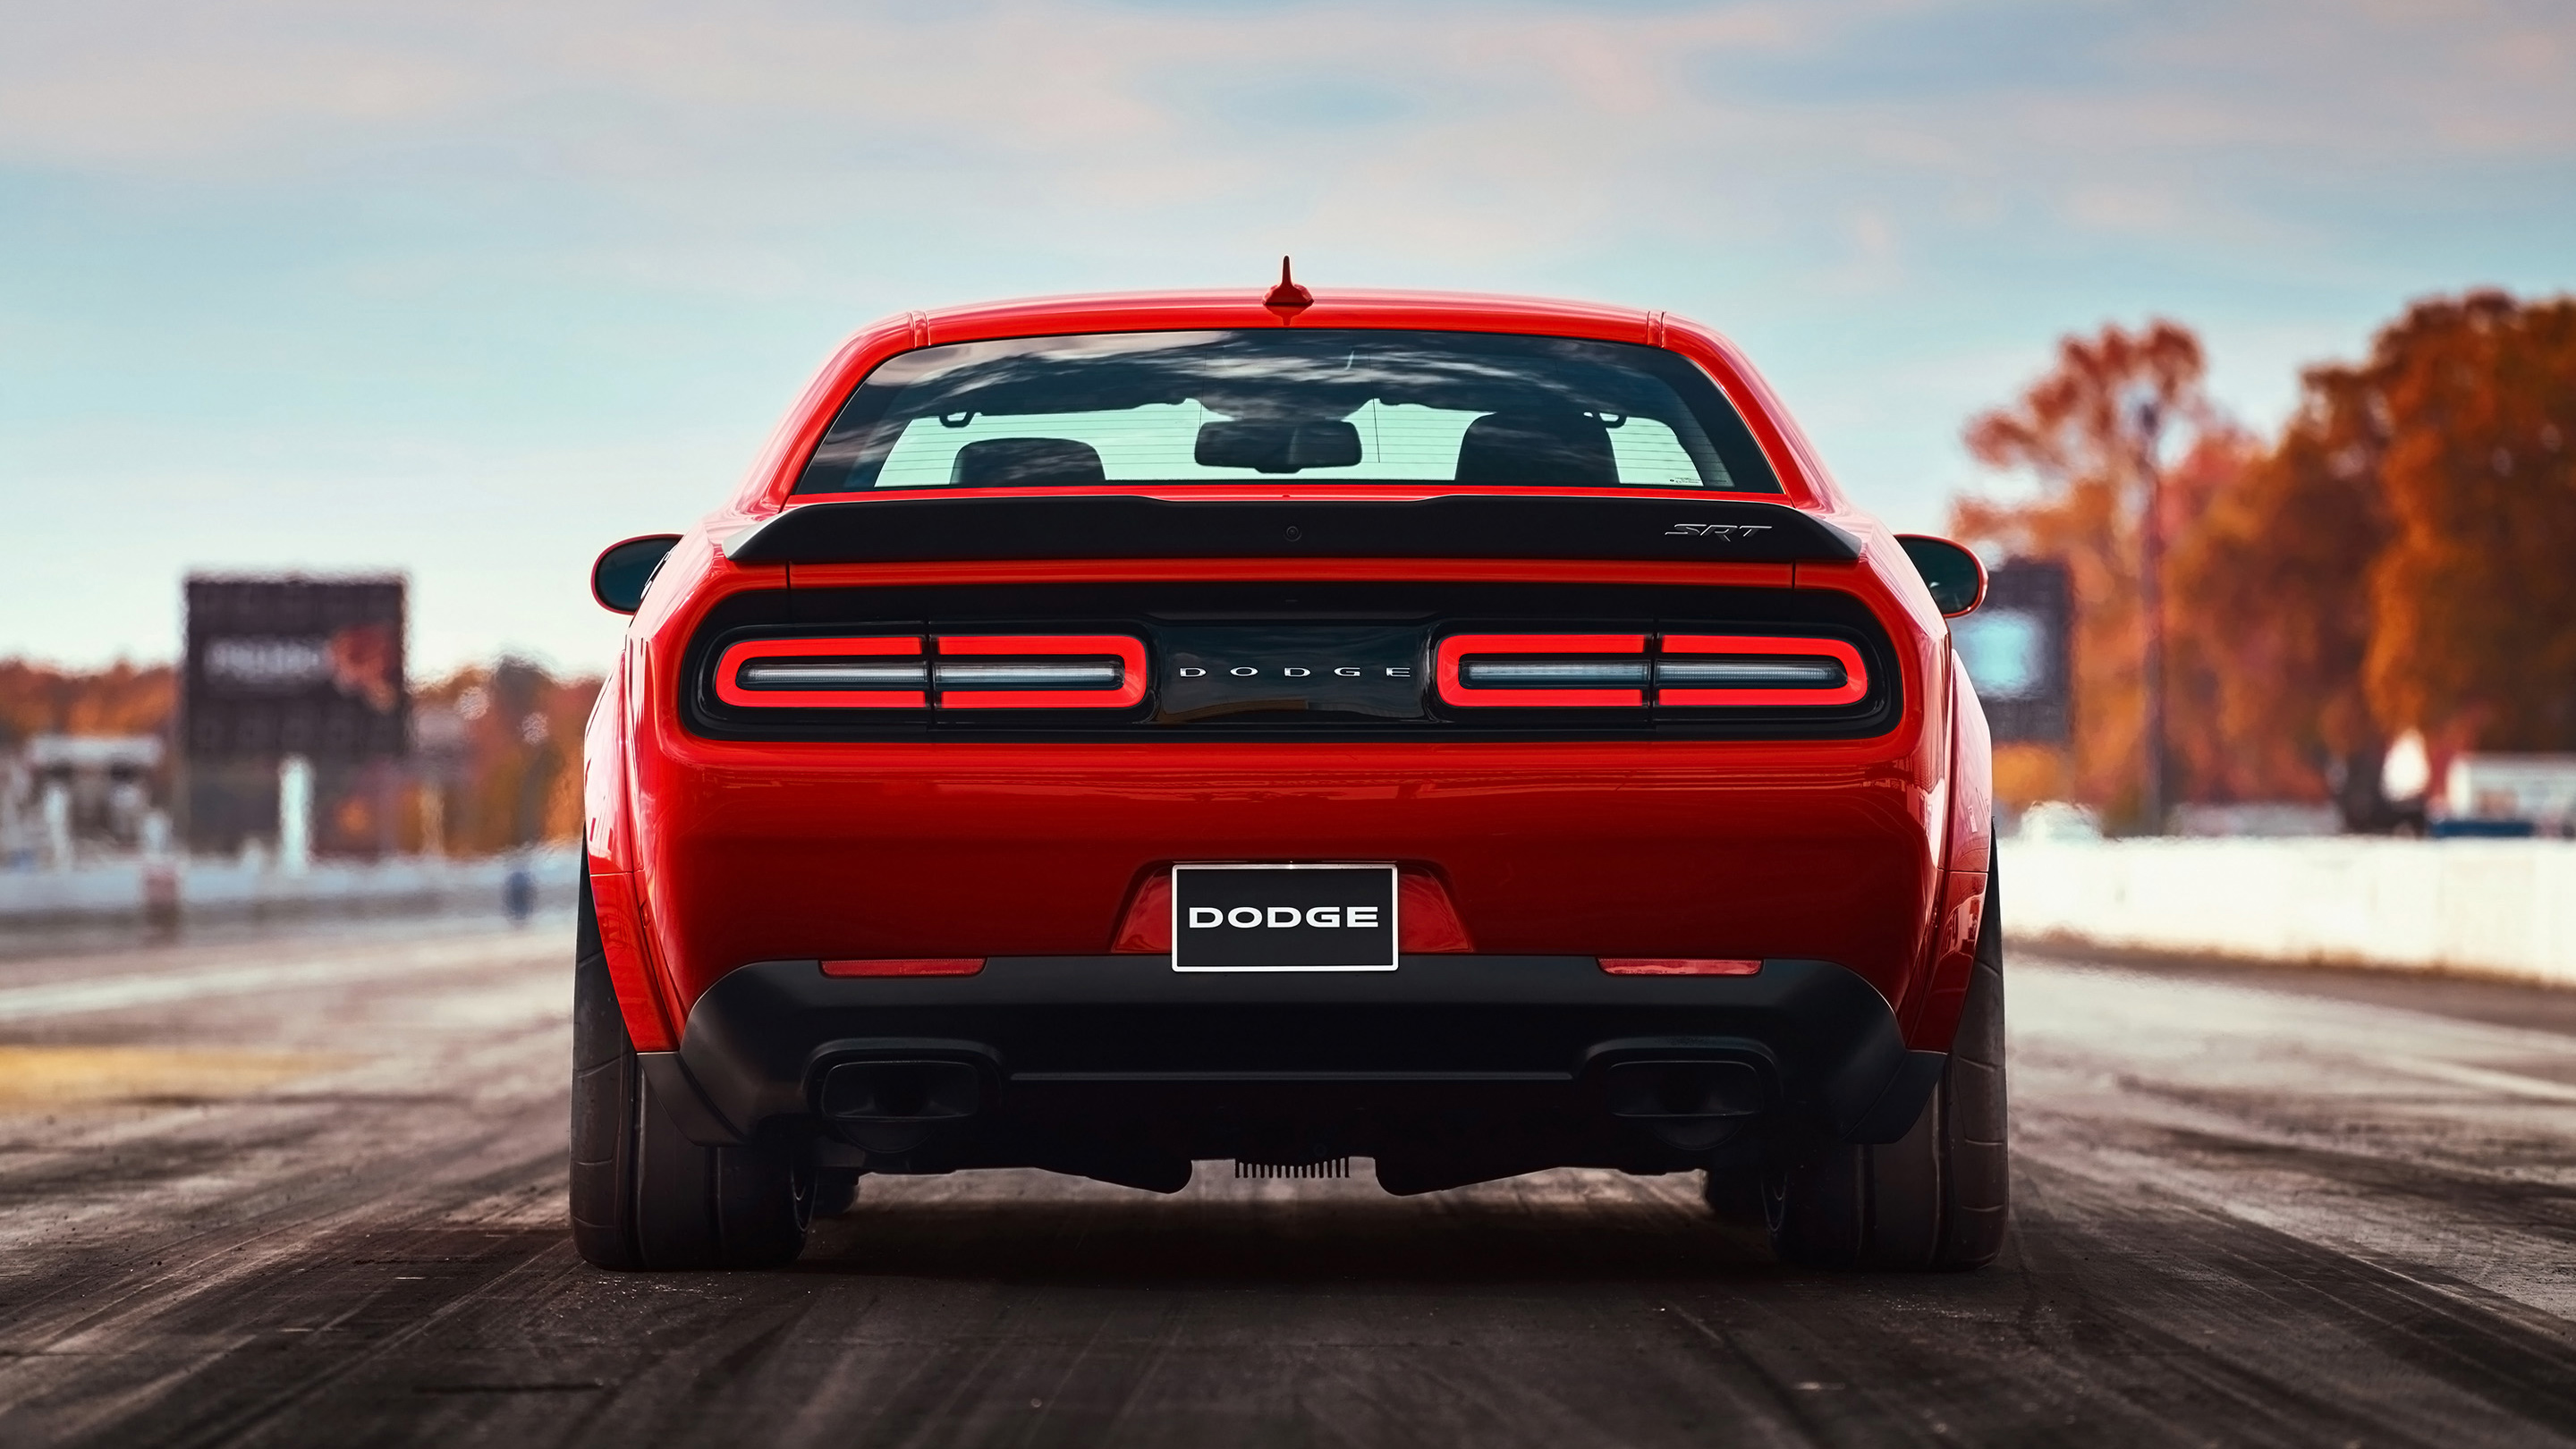 2018 Dodge Challenger SRT Demon 7 Wallpaper | HD Car Wallpapers | ID #7892 - Dodge Challenger Demon Wallpaper Hd